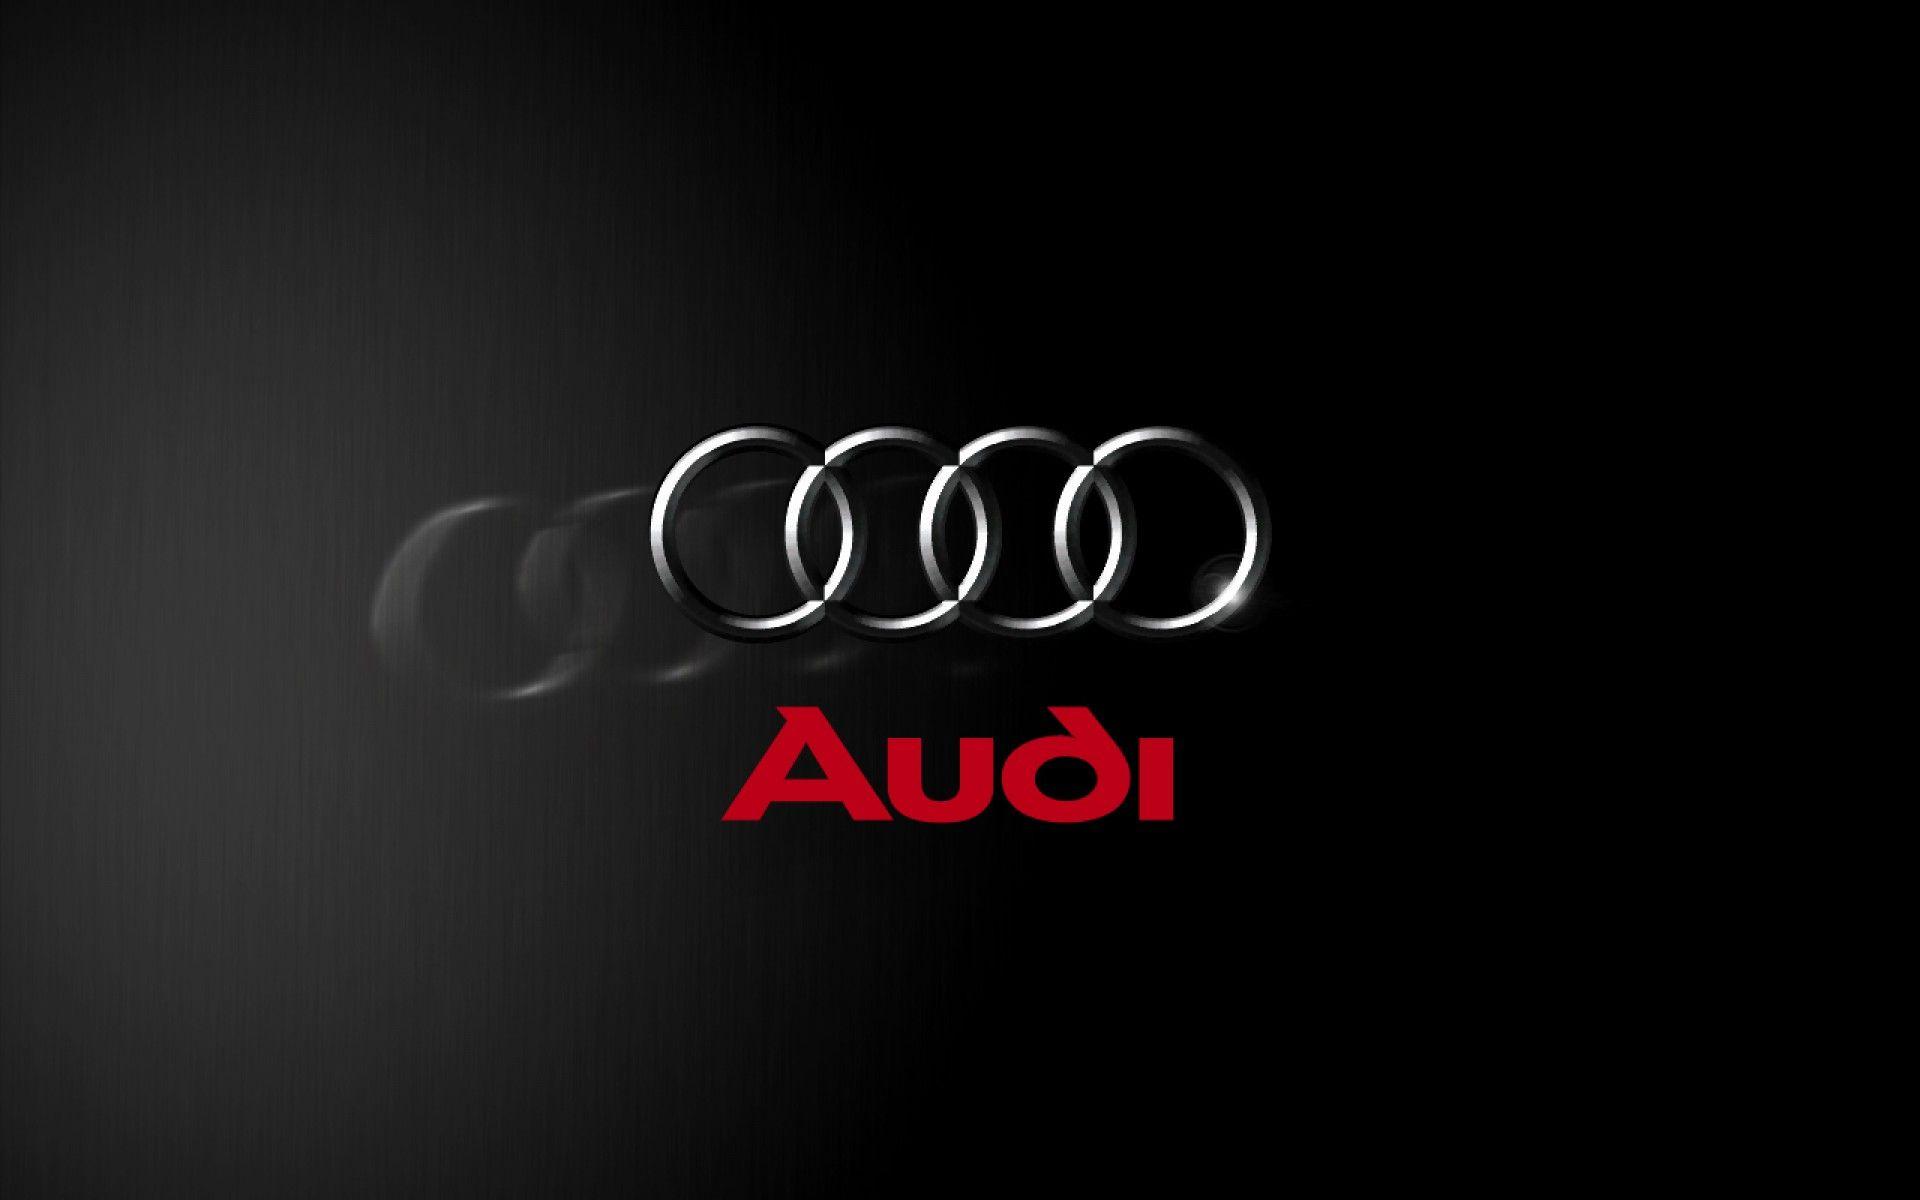 Audi Car Symbol Wallpaper